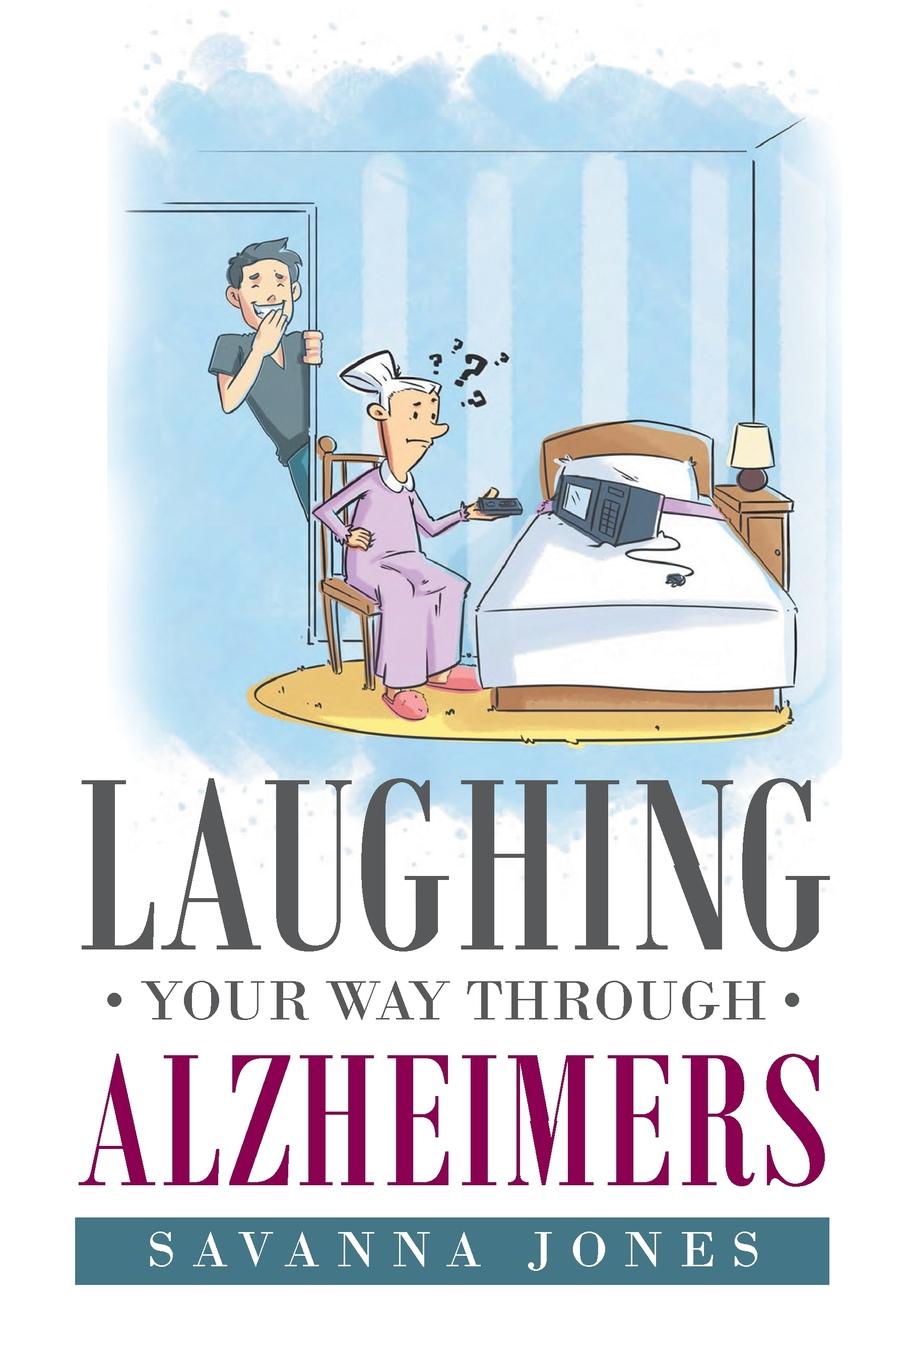 Savanna Jones Laughing Your Way Through Alzheimers